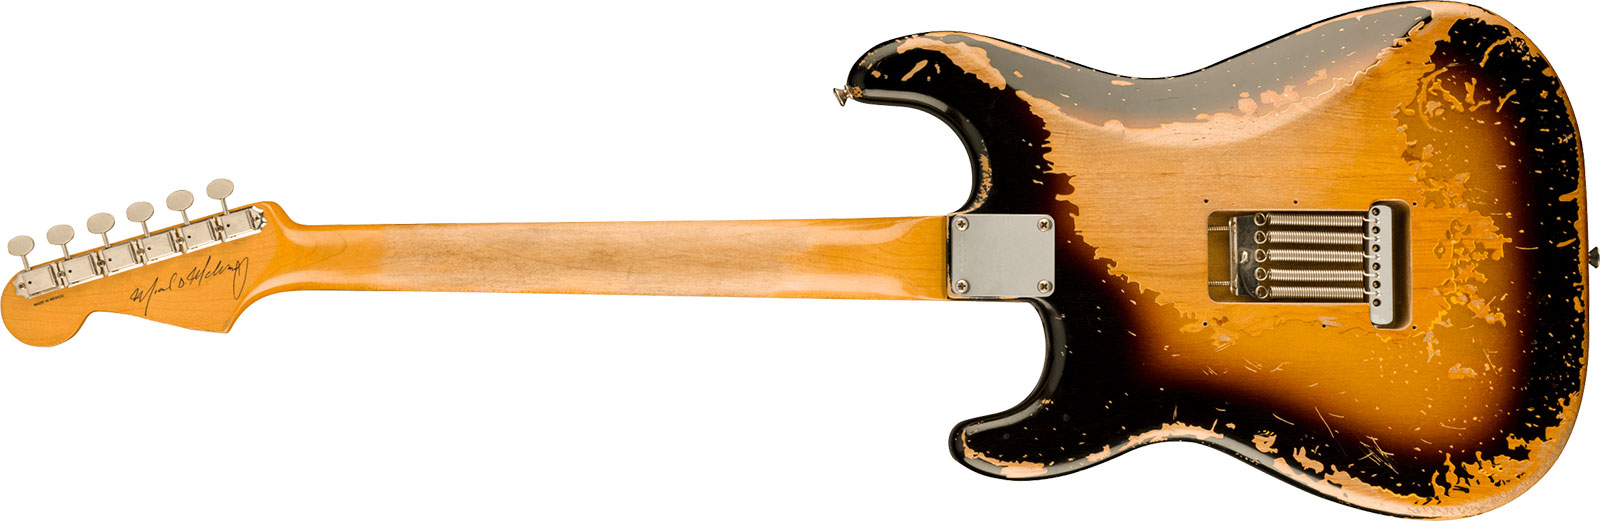 Fender Mike Mccready Strat Mex Signature 3s Trem Rw - Road Worn 3-color Sunburst - Signature electric guitar - Variation 1